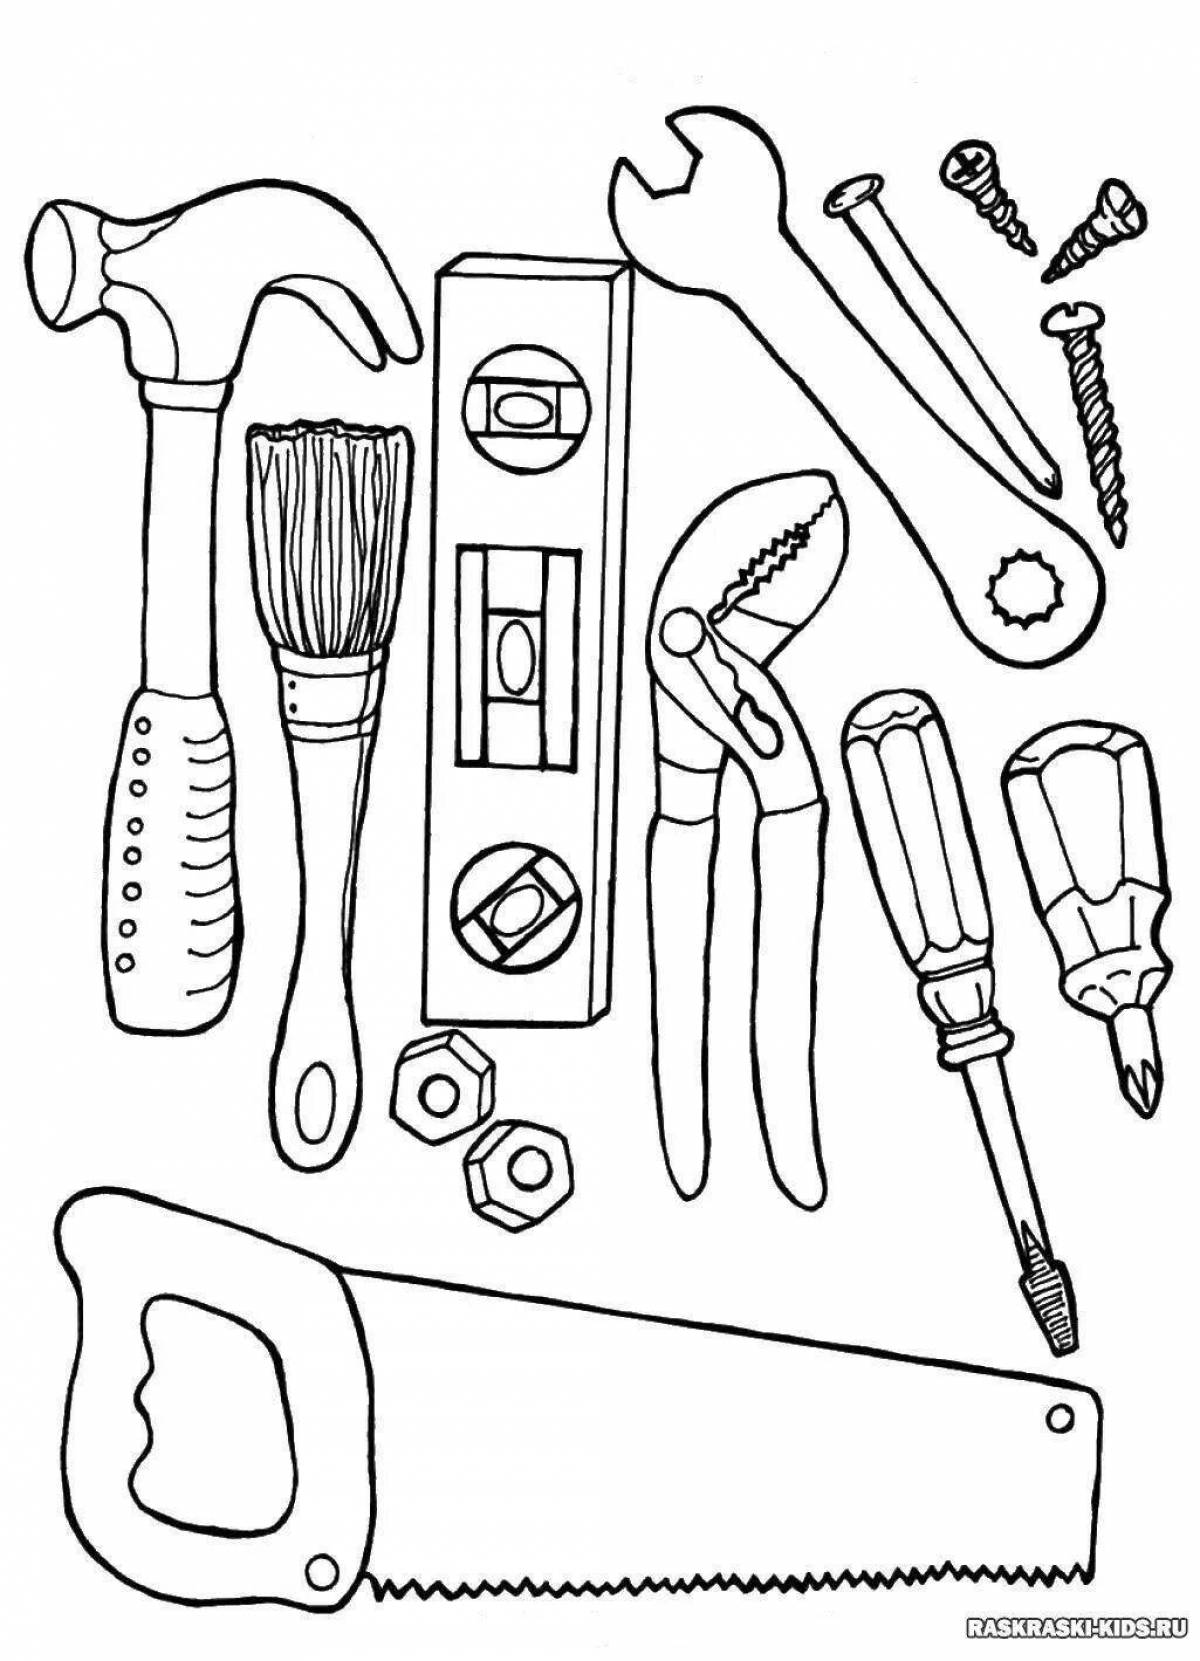 Tools for preschool kids #15